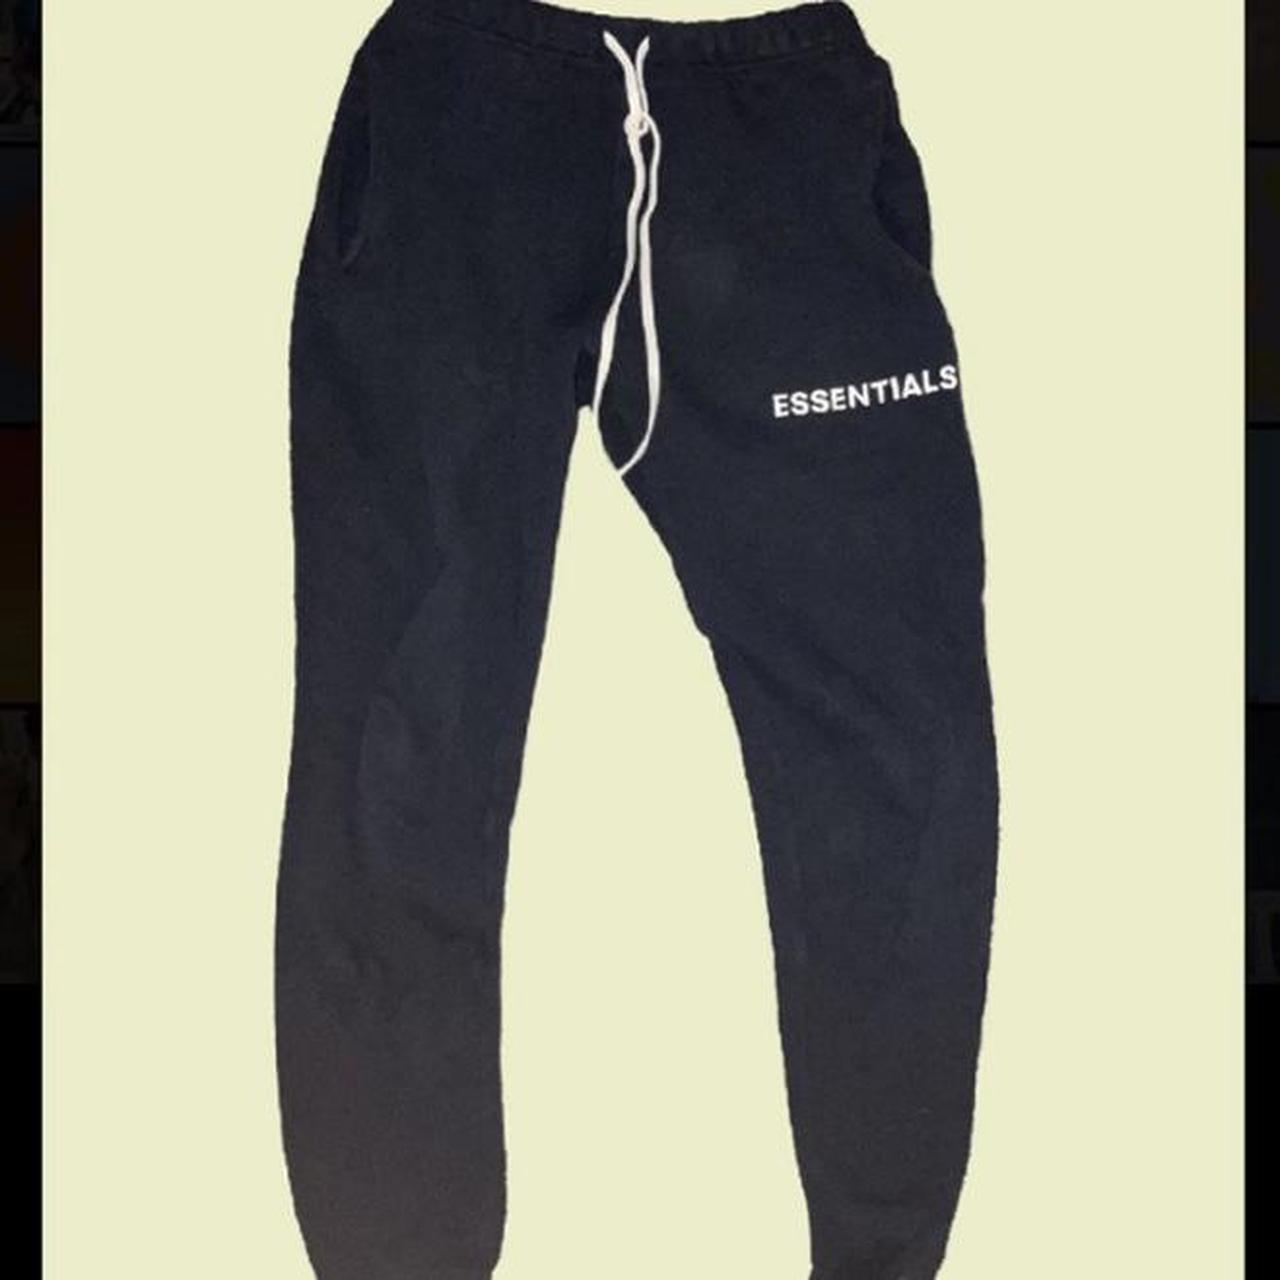 Fear of God Essentials Sweatpants Black Size S - Men's Clothing